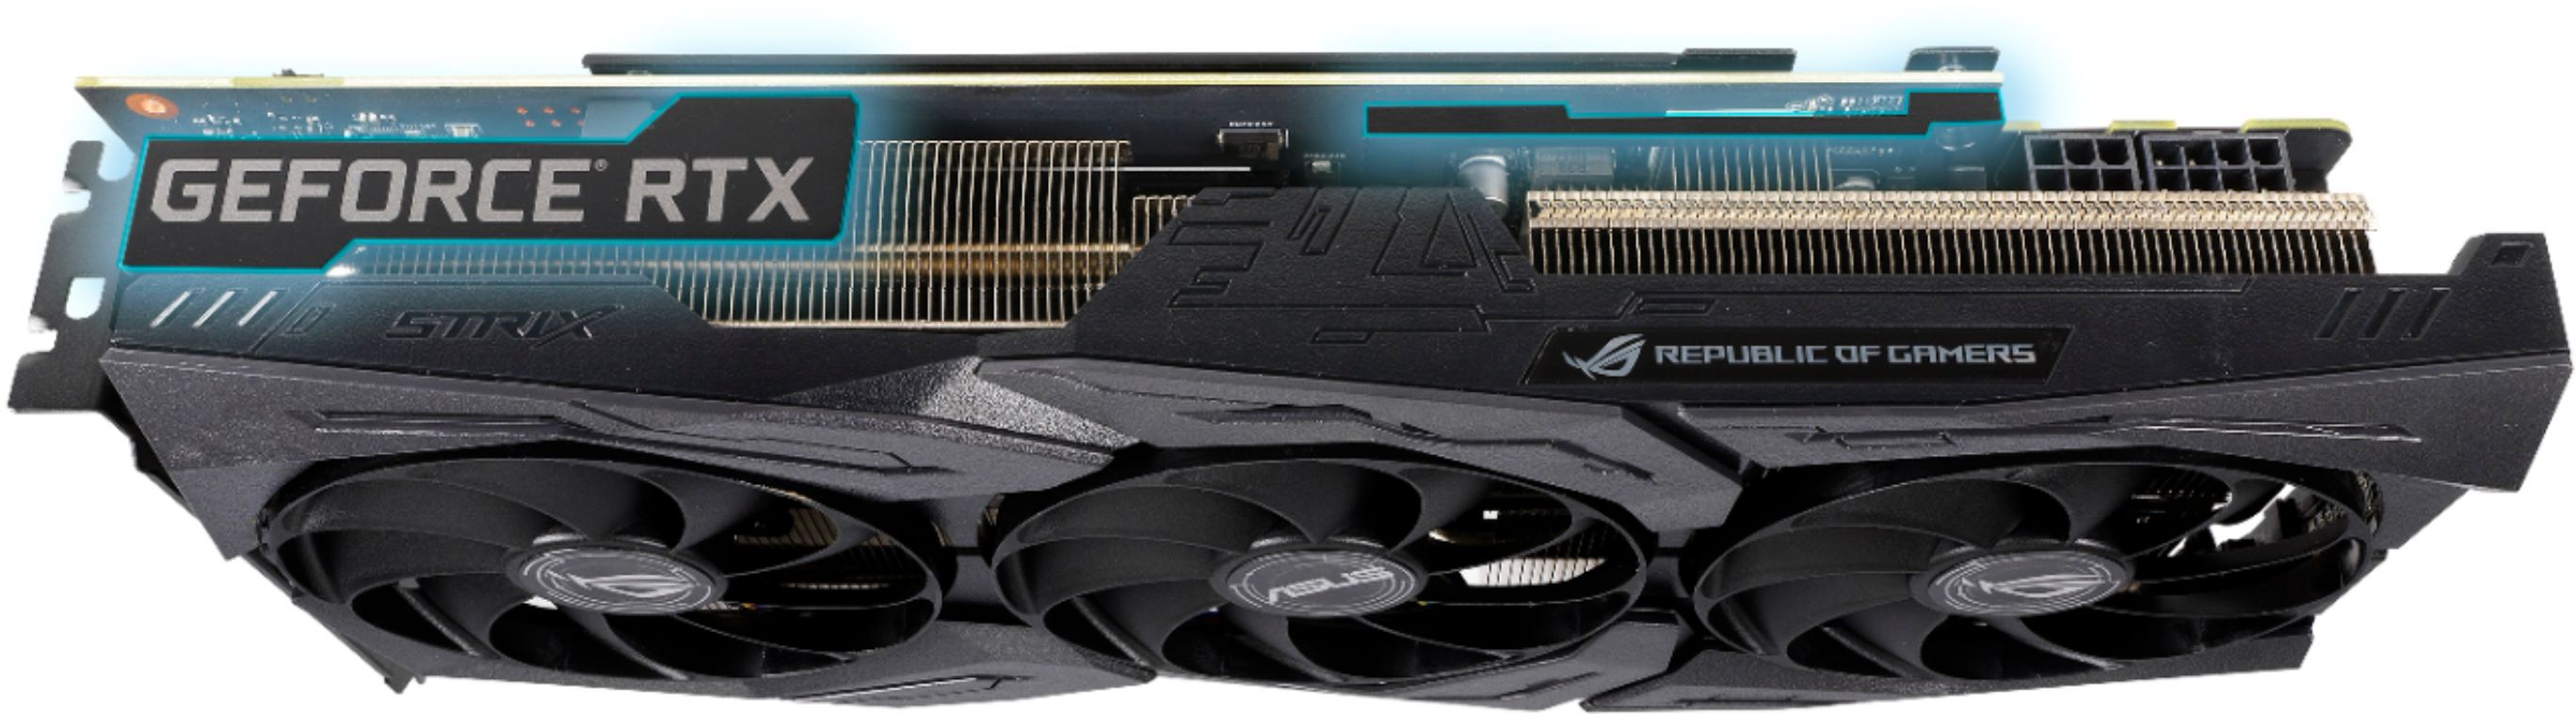 Asus Nvidia Geforce Rtx 60 Super Advanced Edition 8gb Gddr6 Pci Express 3 0 Graphics Card Black Rog Strix Rtx60s A8g Evo Gam Best Buy